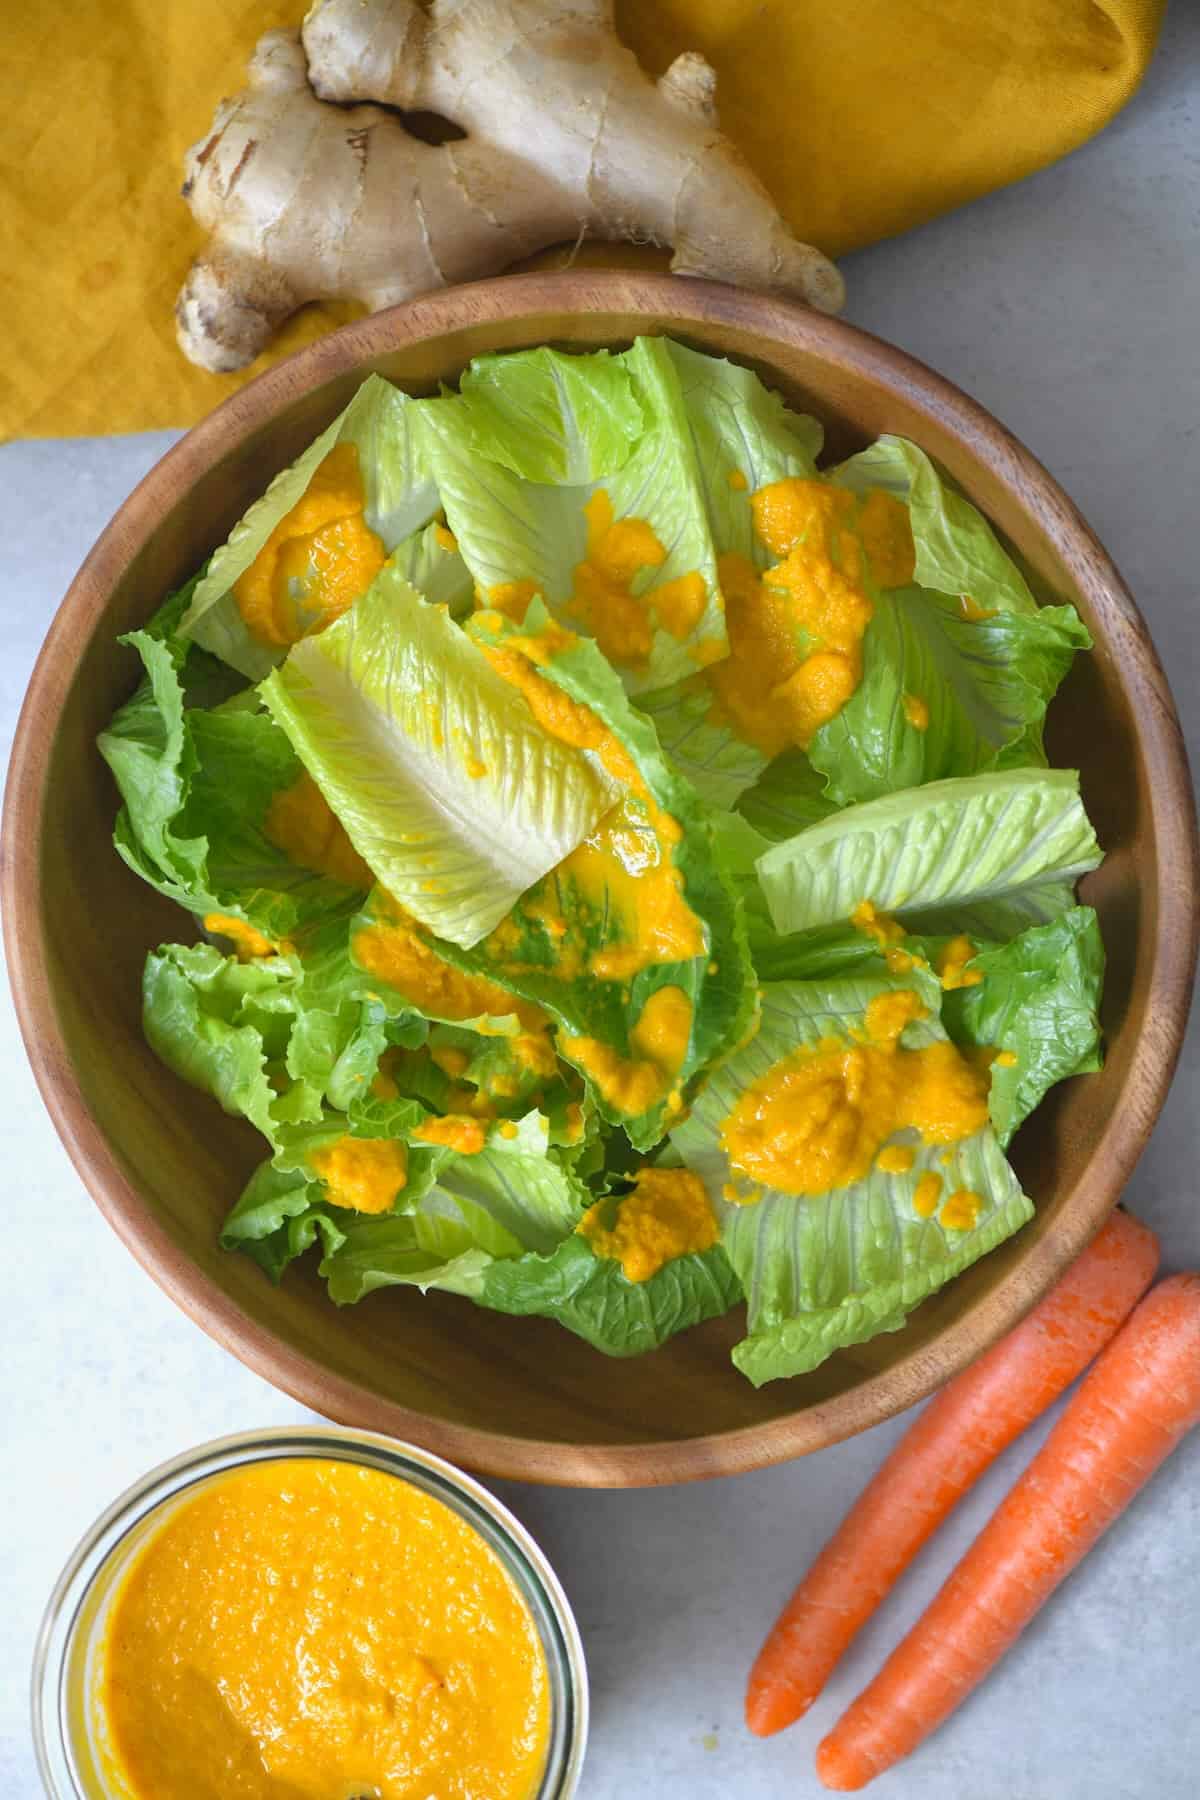 Lettuce salad with ginger carrot salad dressing